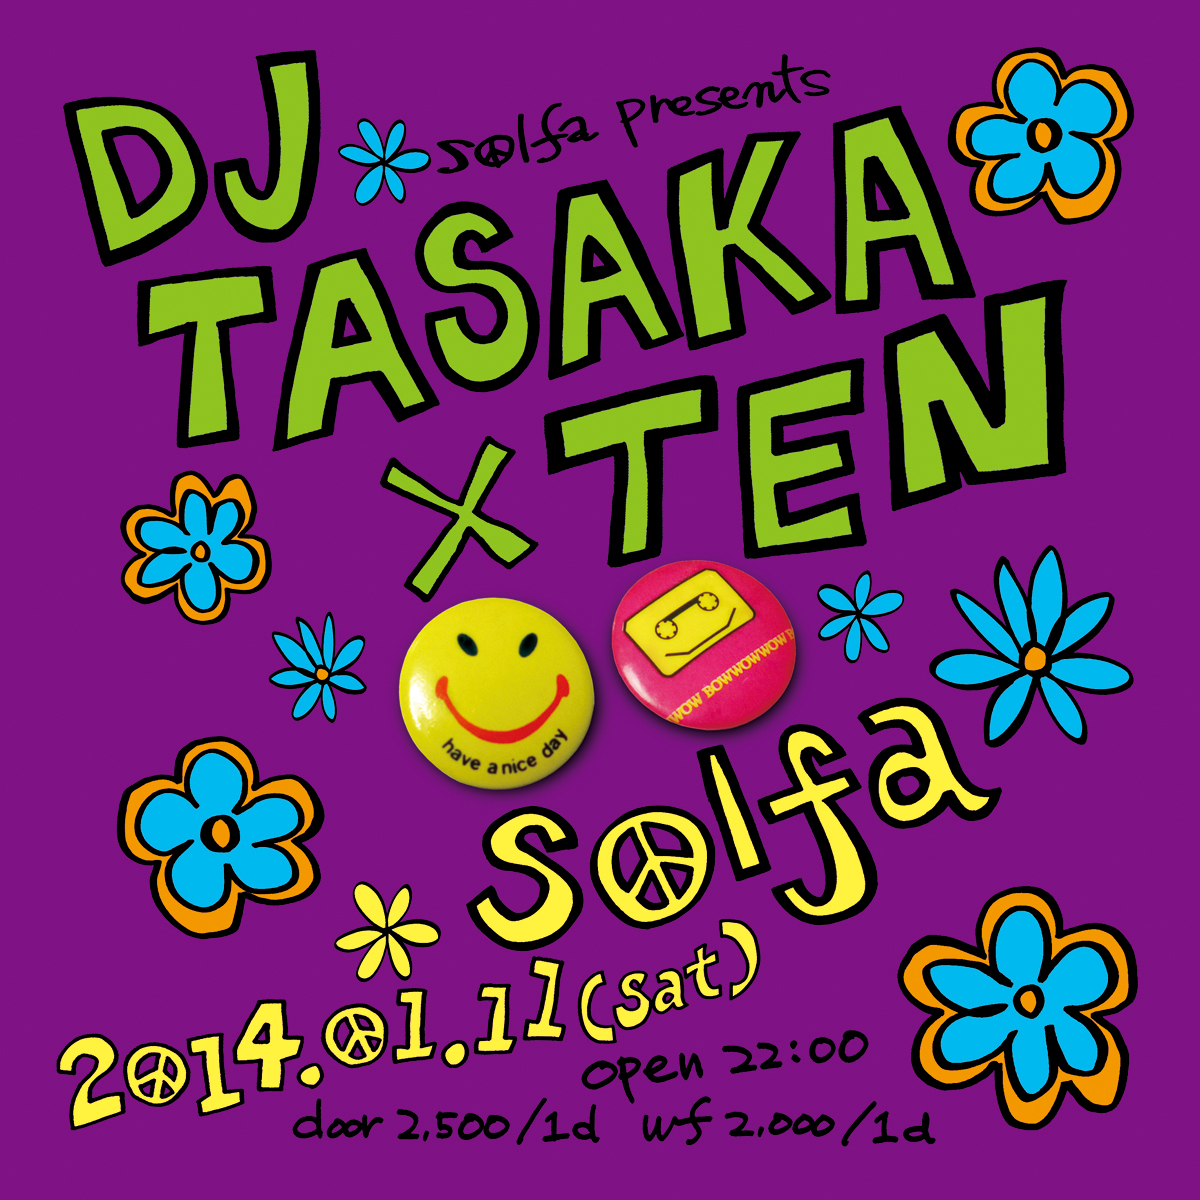 Solfa Presents “DJ Tasaka × Ten”